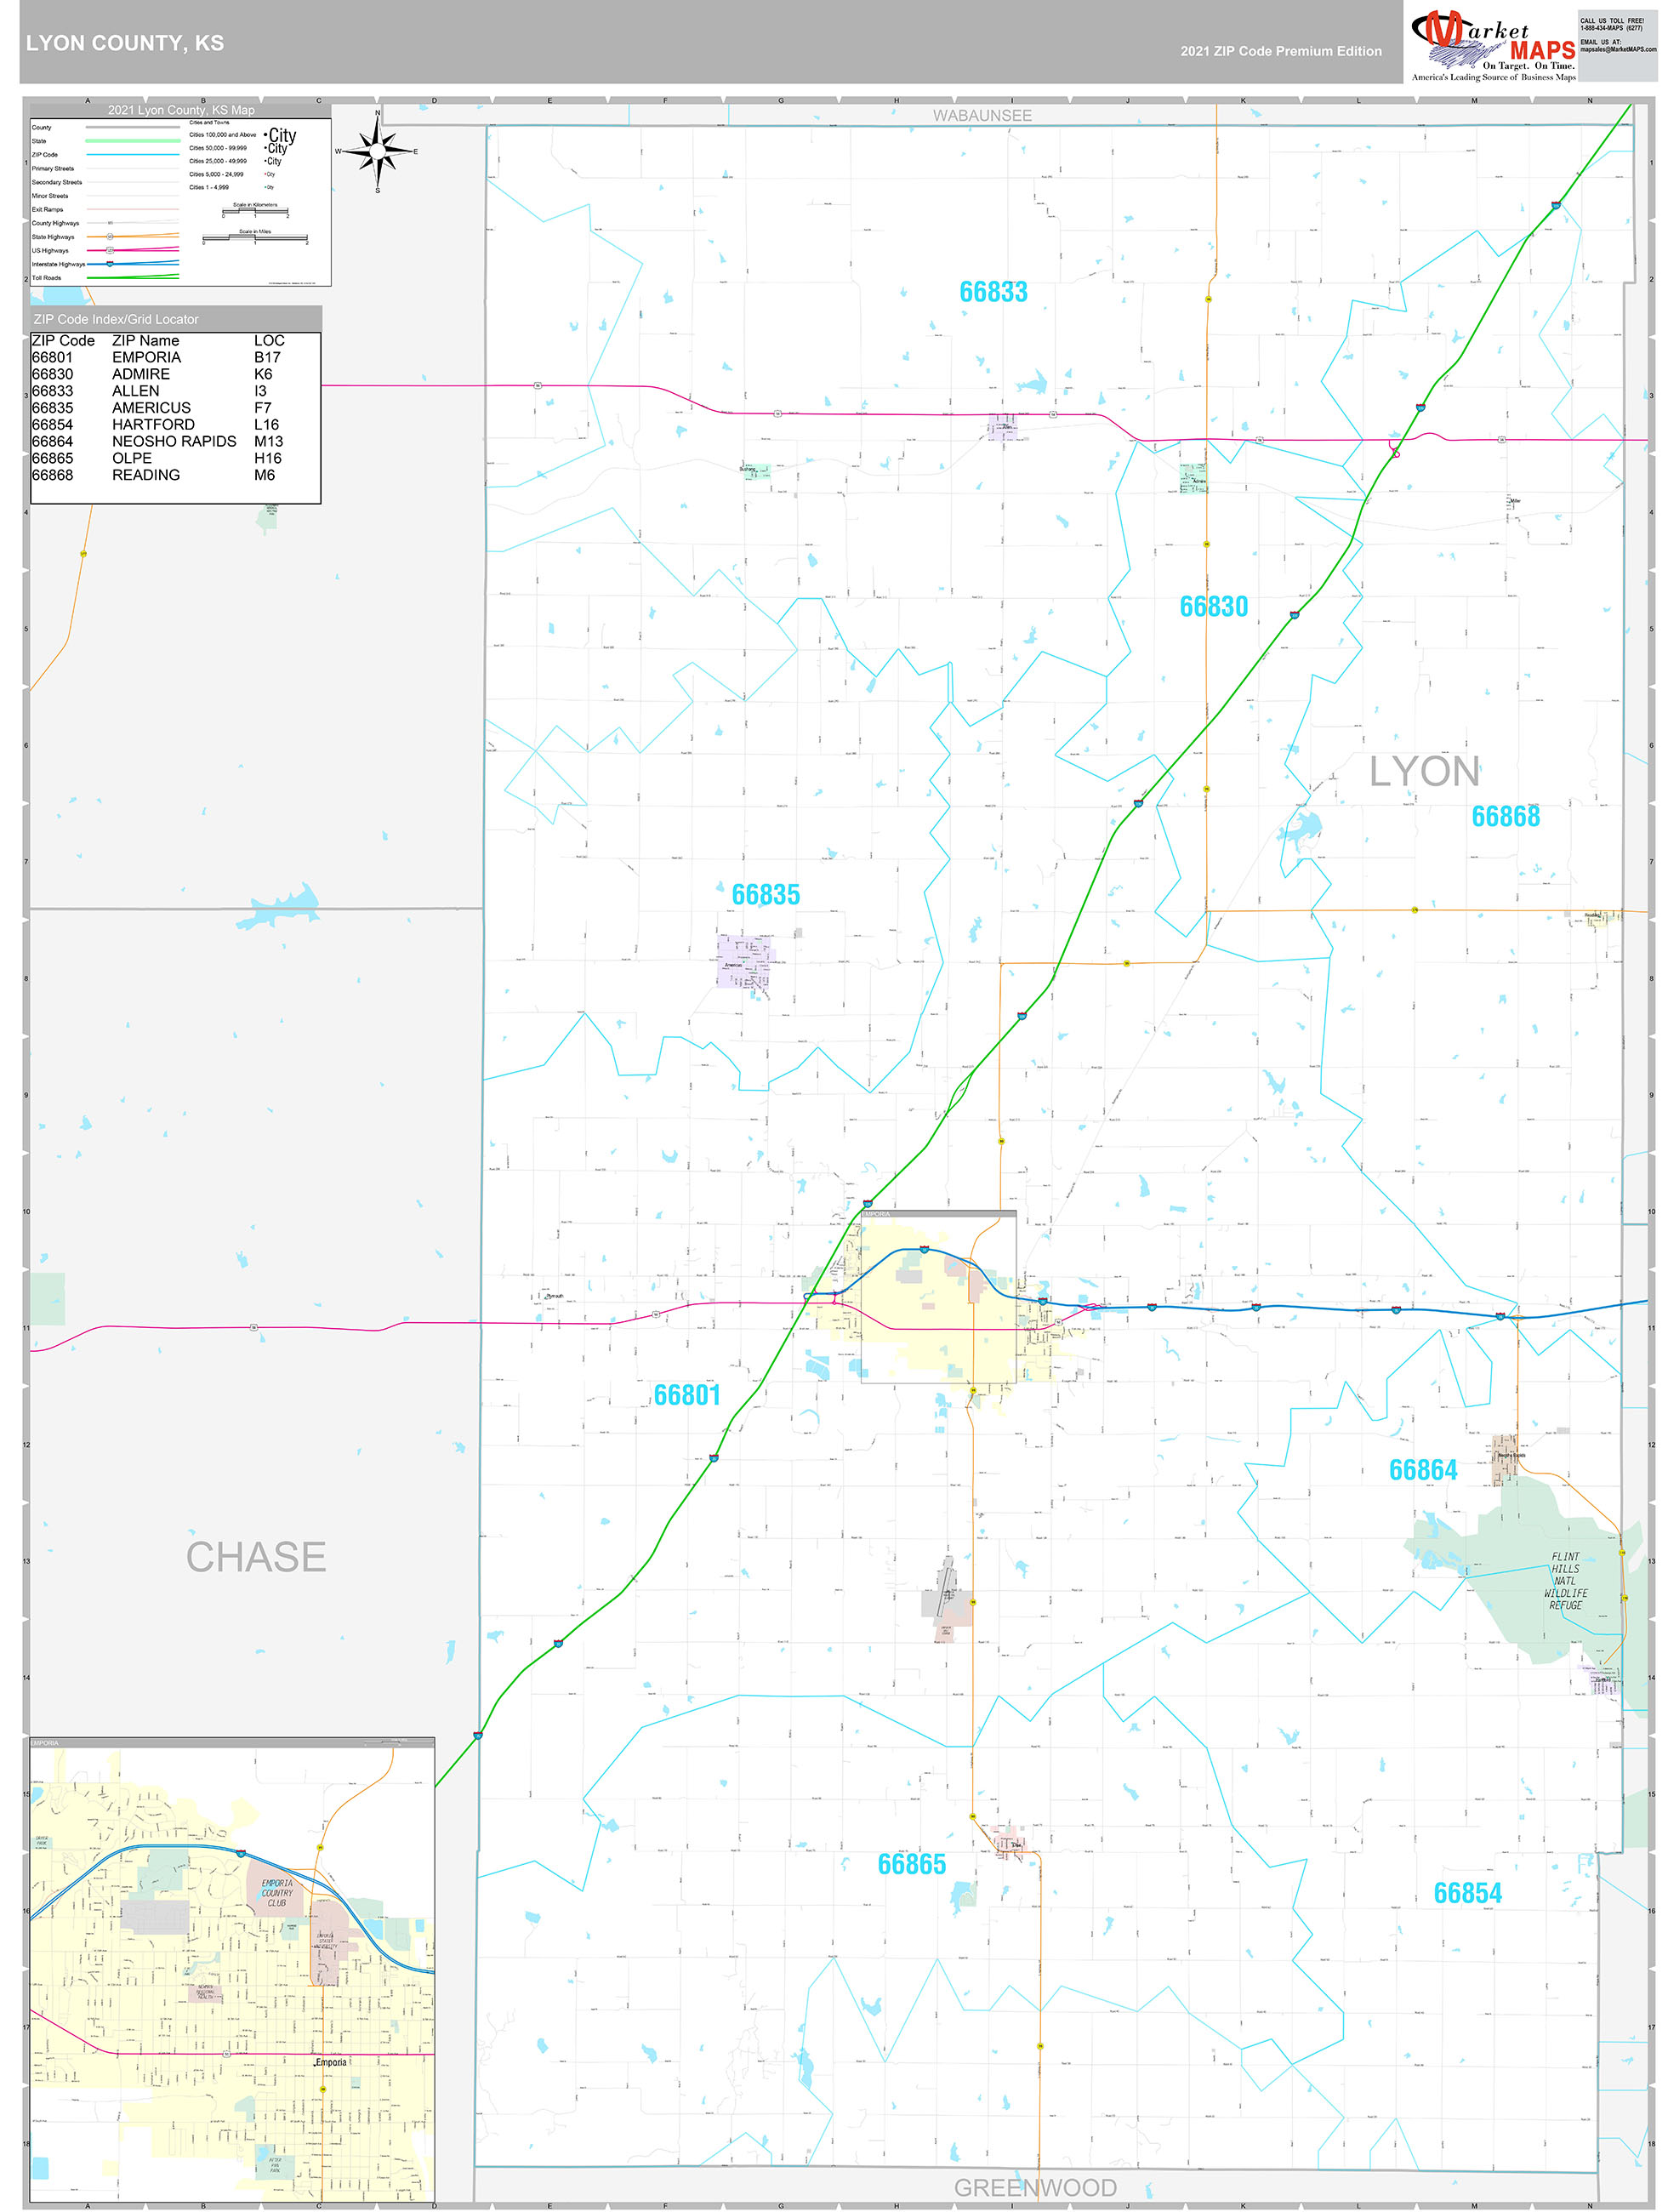 Lyon County, KS Wall Map Premium Style by MarketMAPS MapSales